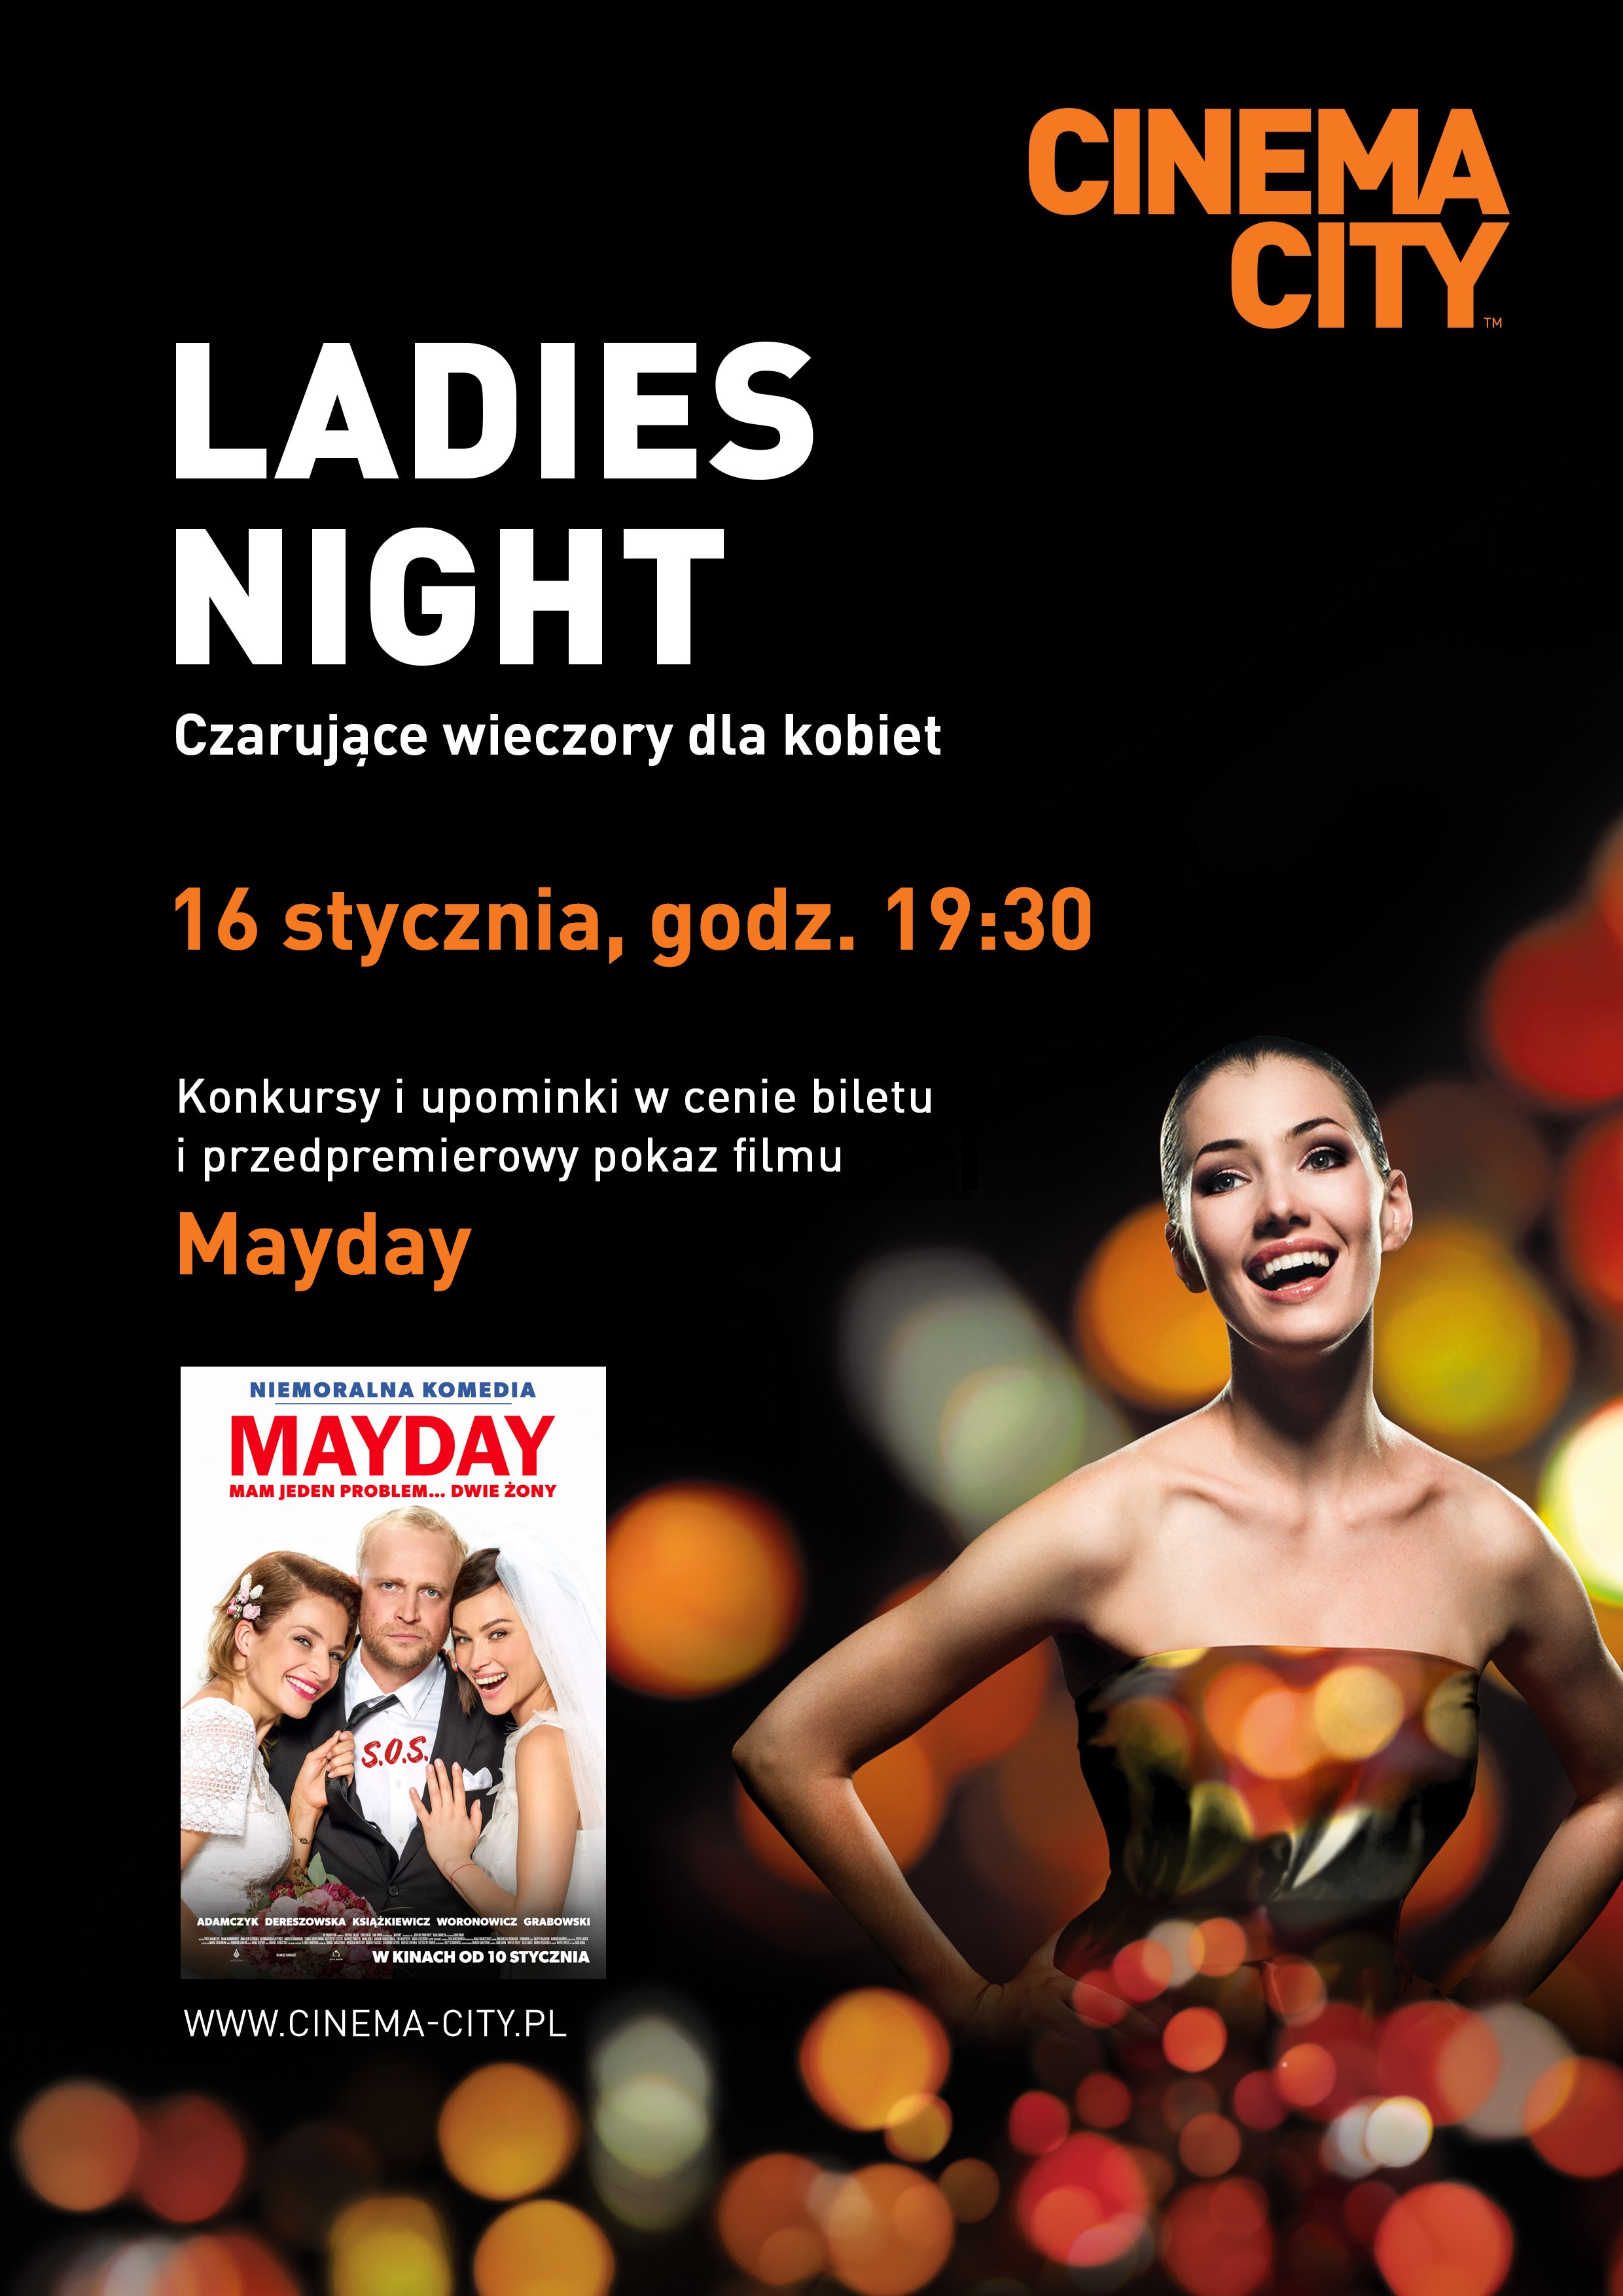 Ladies Night, Cinema City, 2020, styczeń